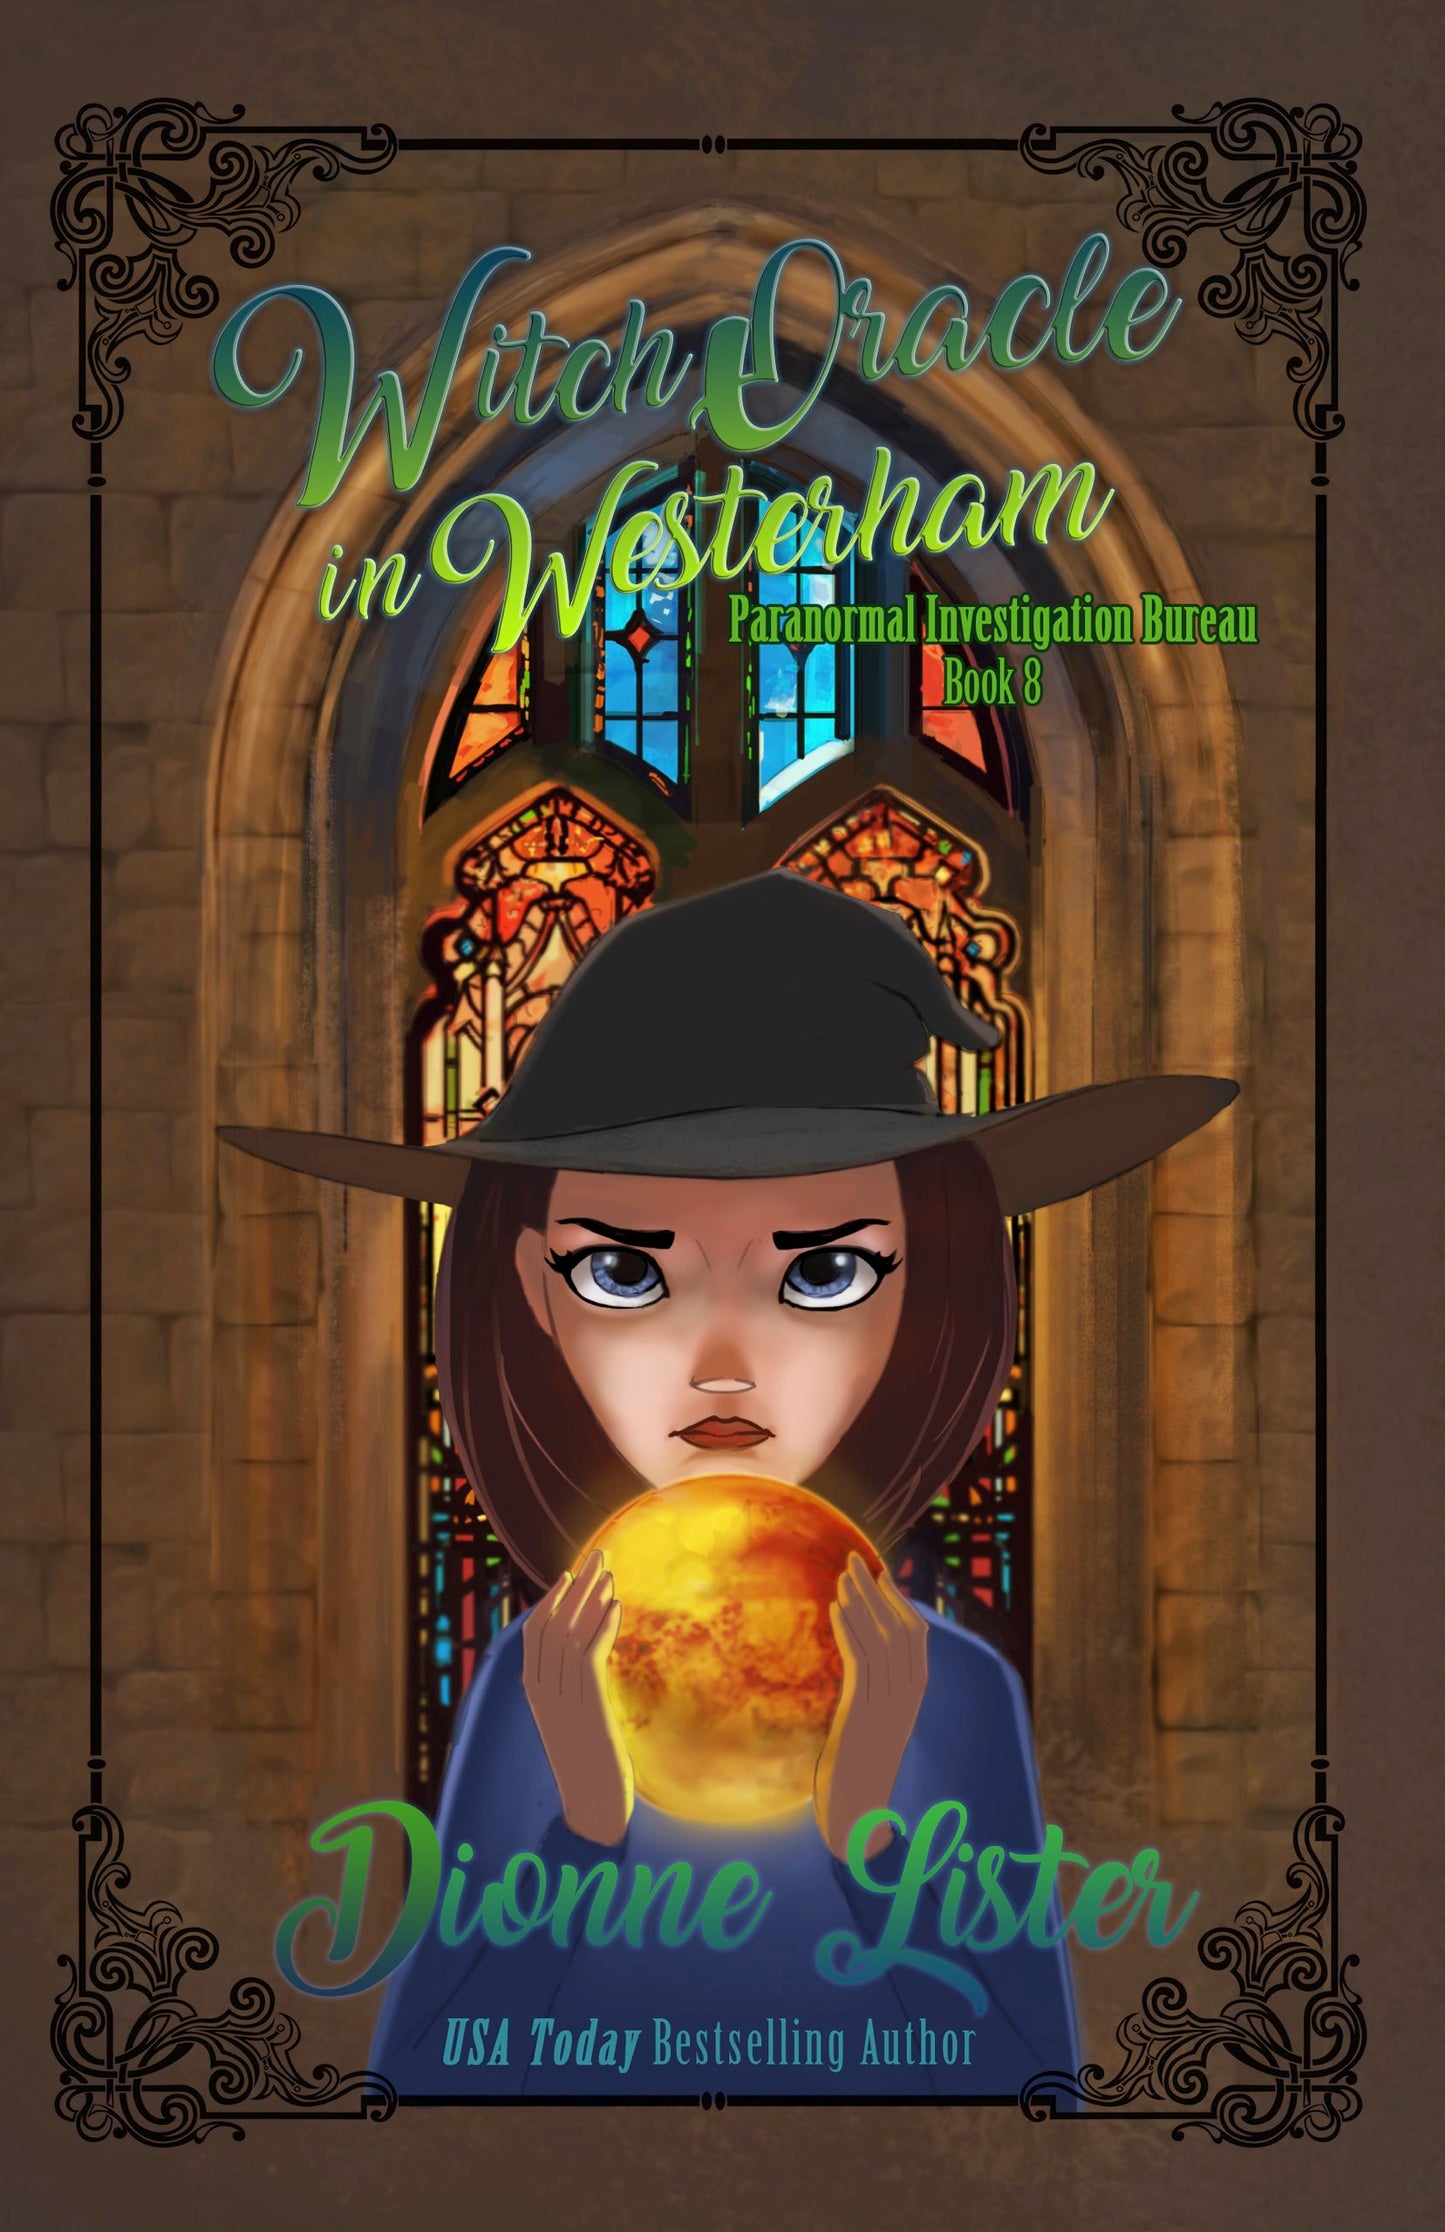 Witch Oracle in Westerham—Paranormal Investigation Bureau Book 8